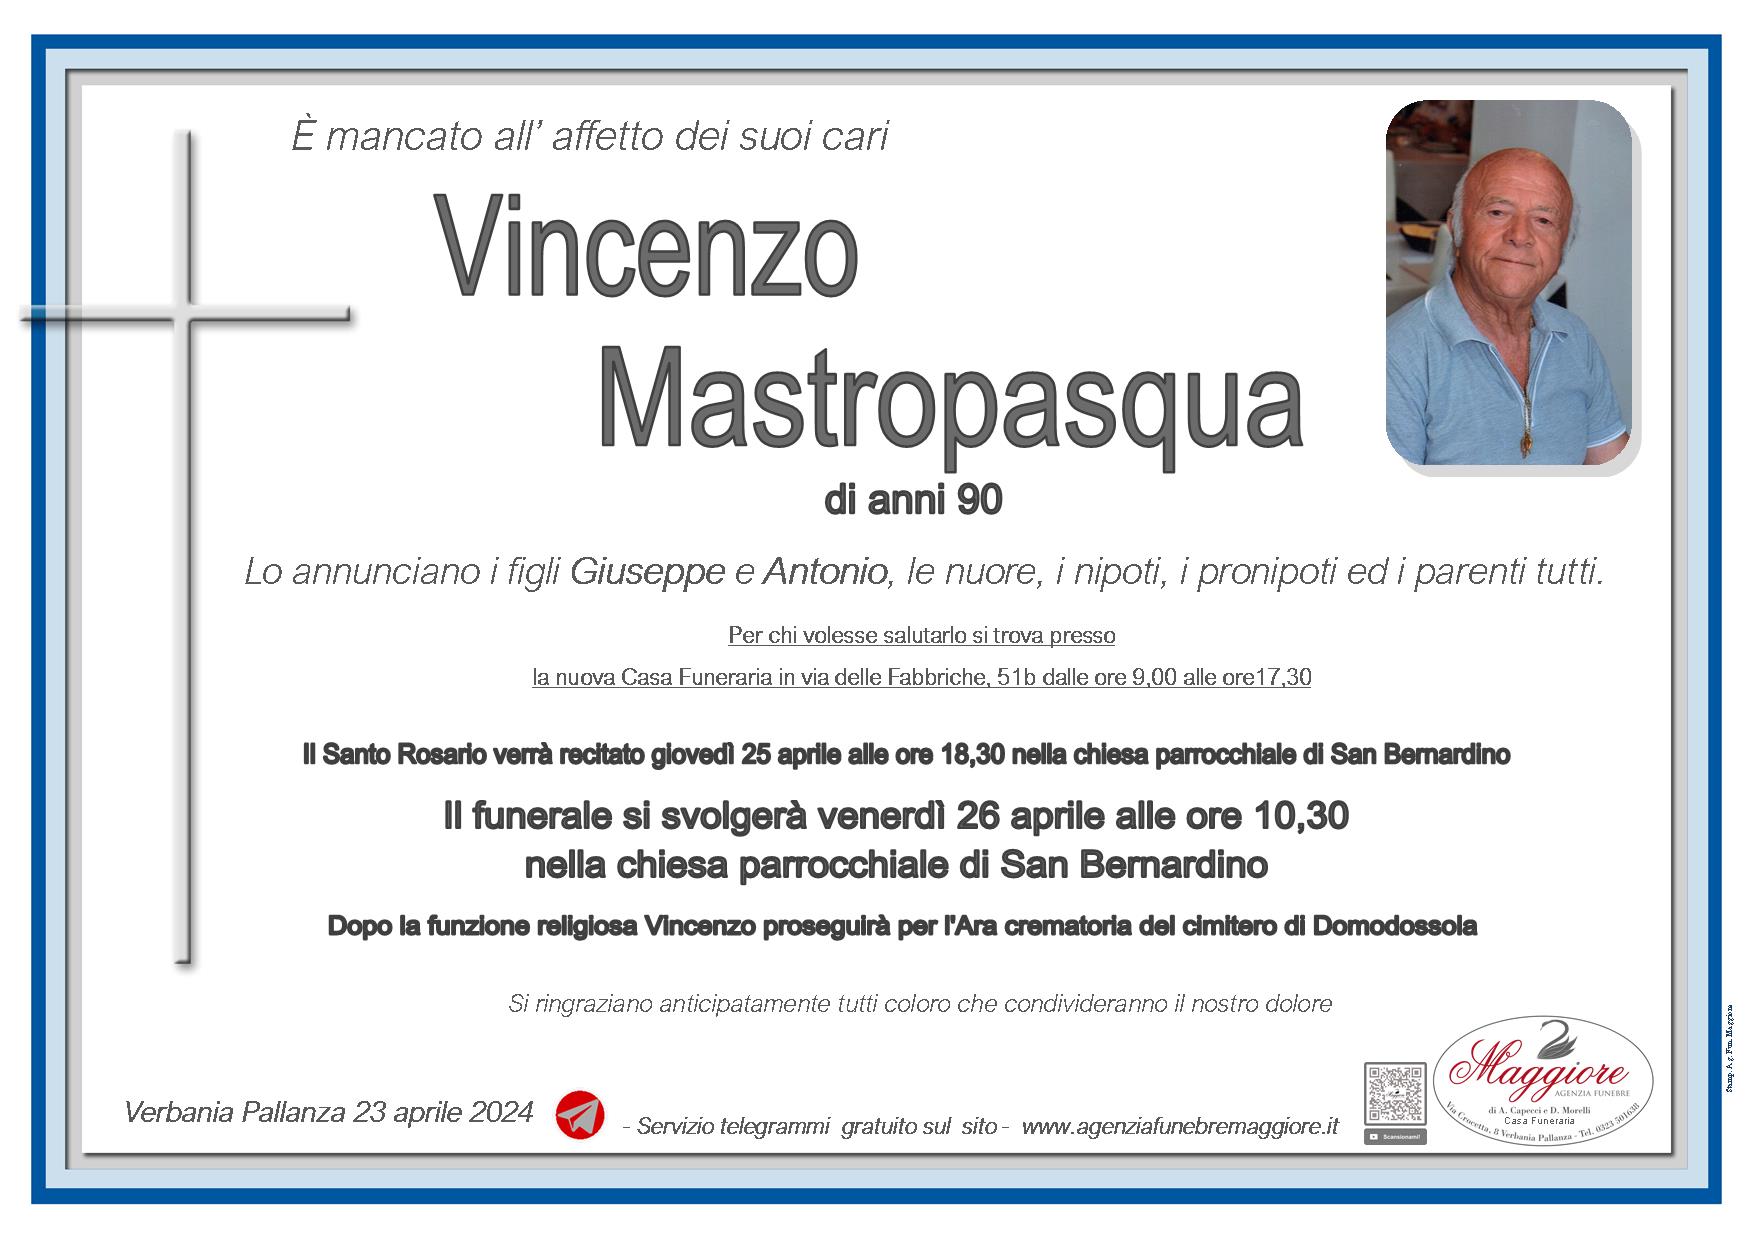 Vincenzo Mastropasqua